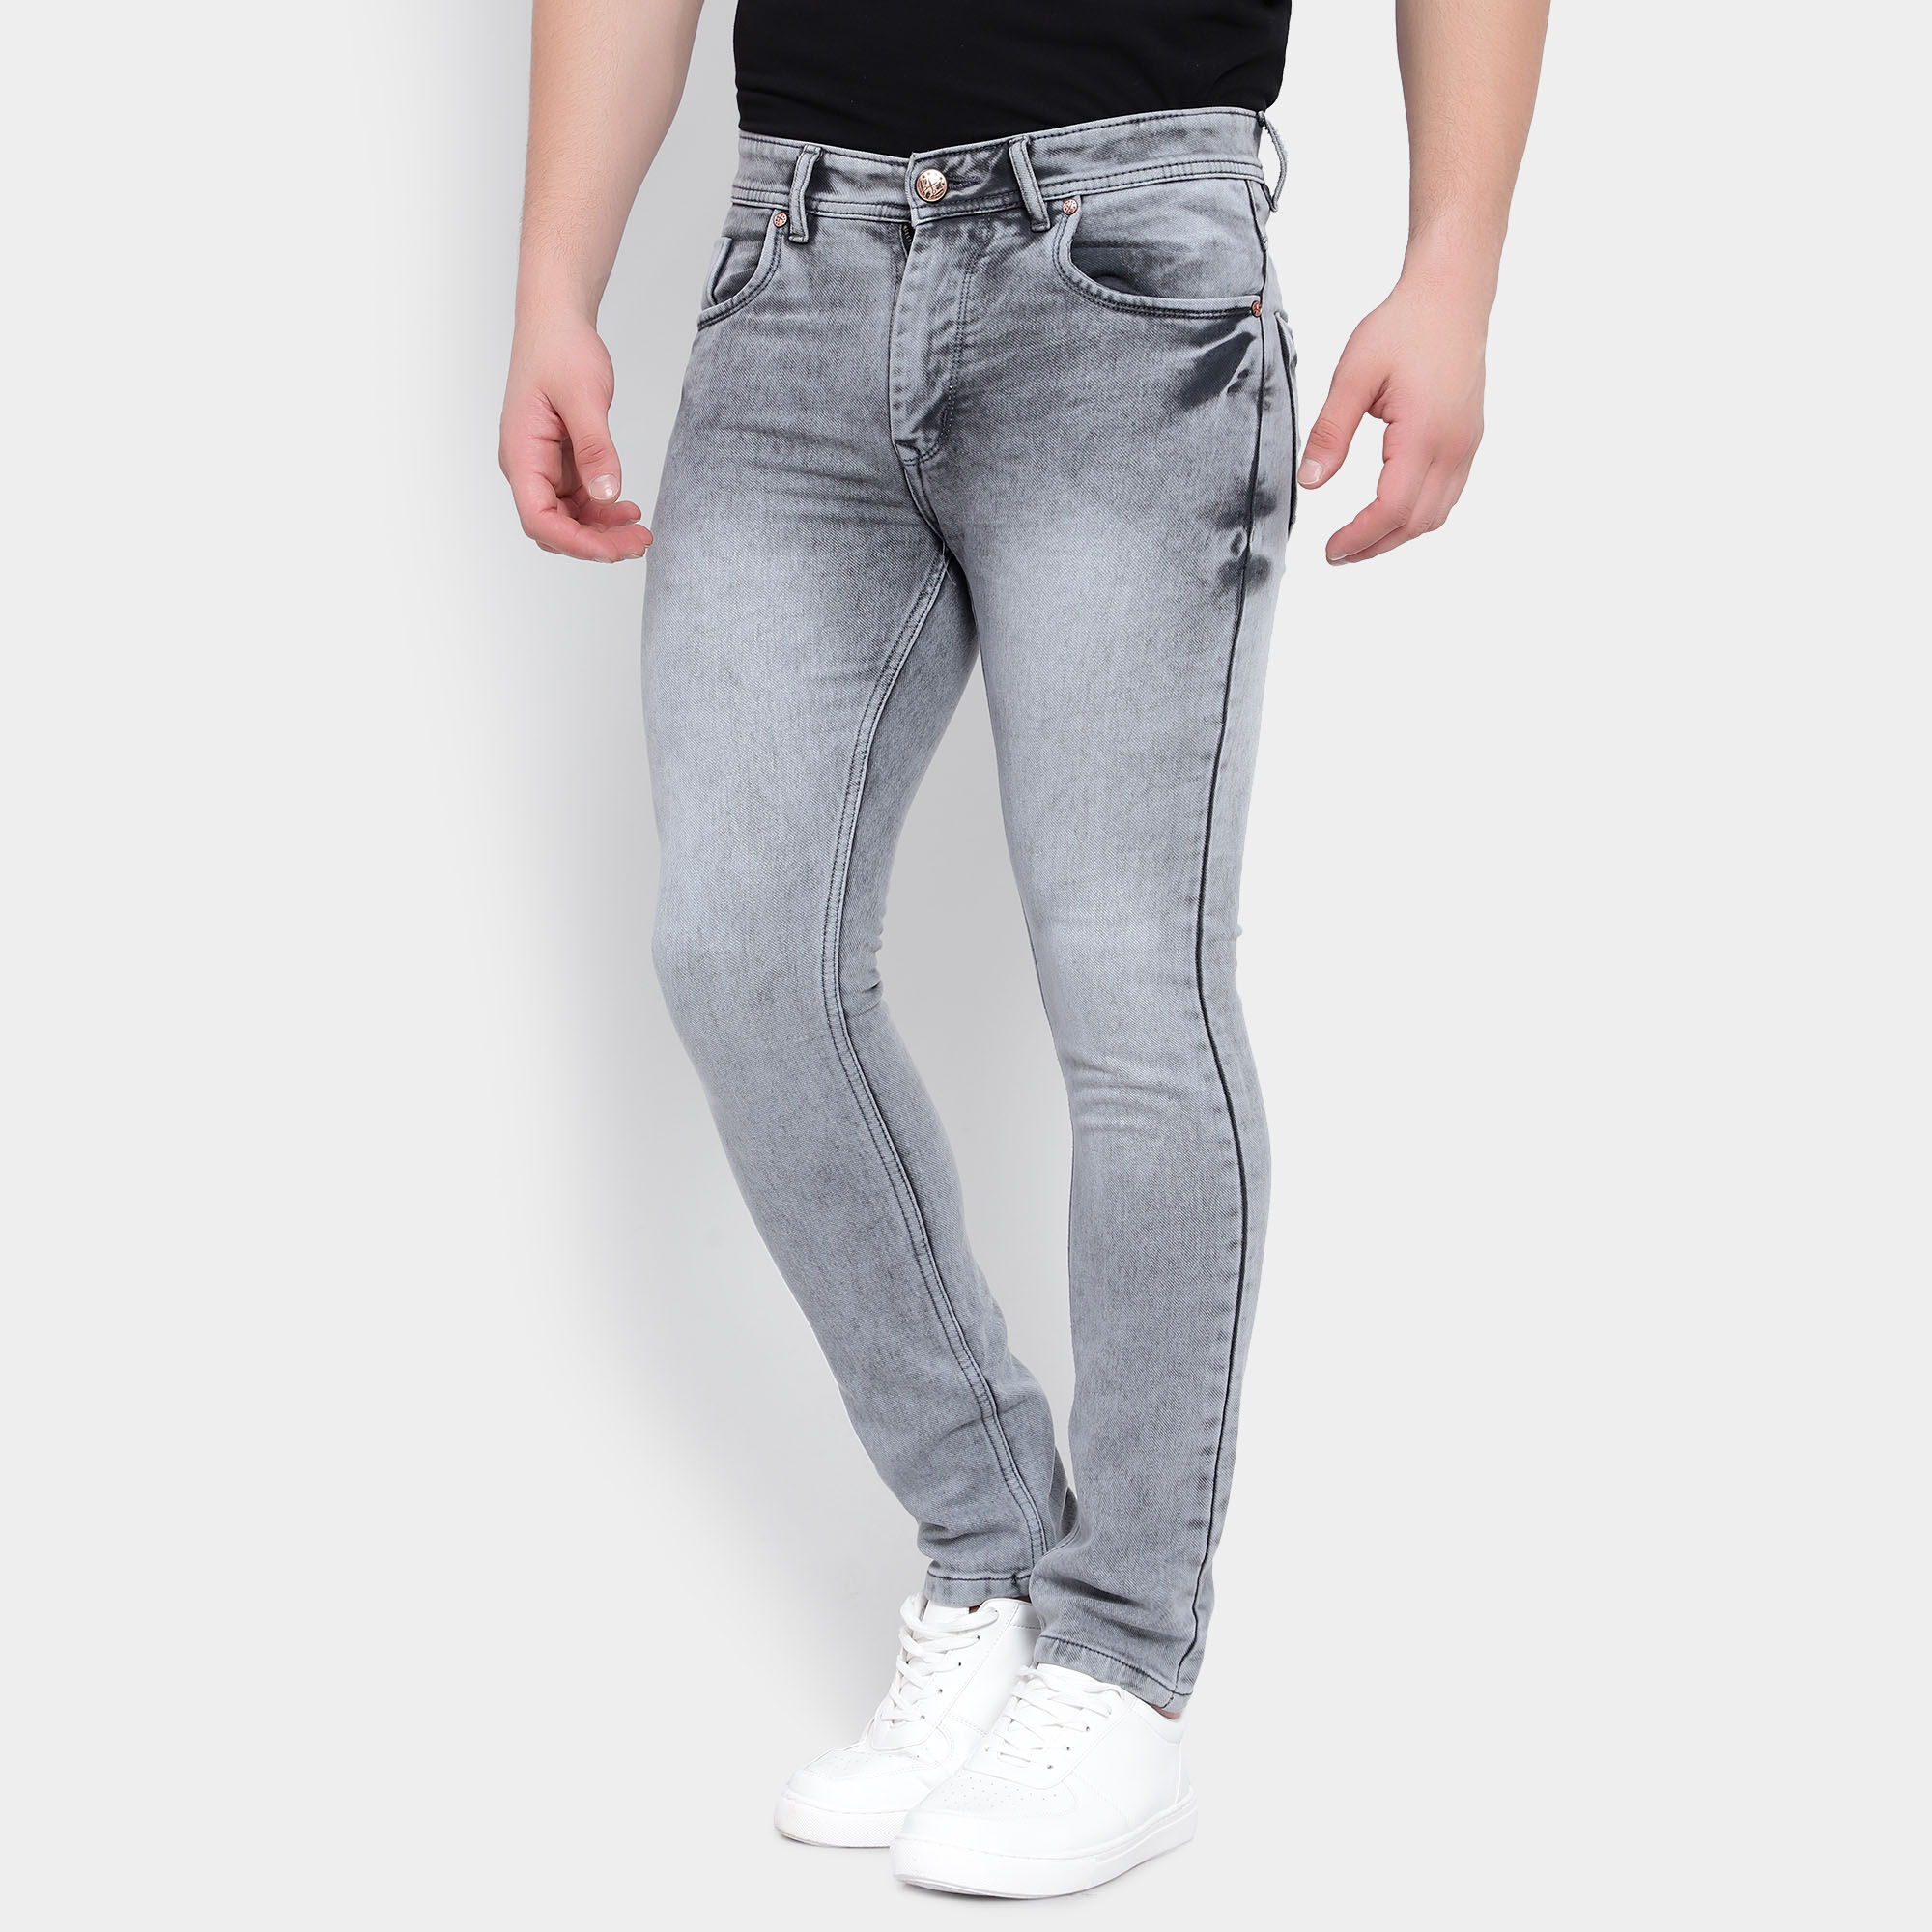 mens dsquared2 jeans size EU 50 light grey wash Skinny Jean | eBay